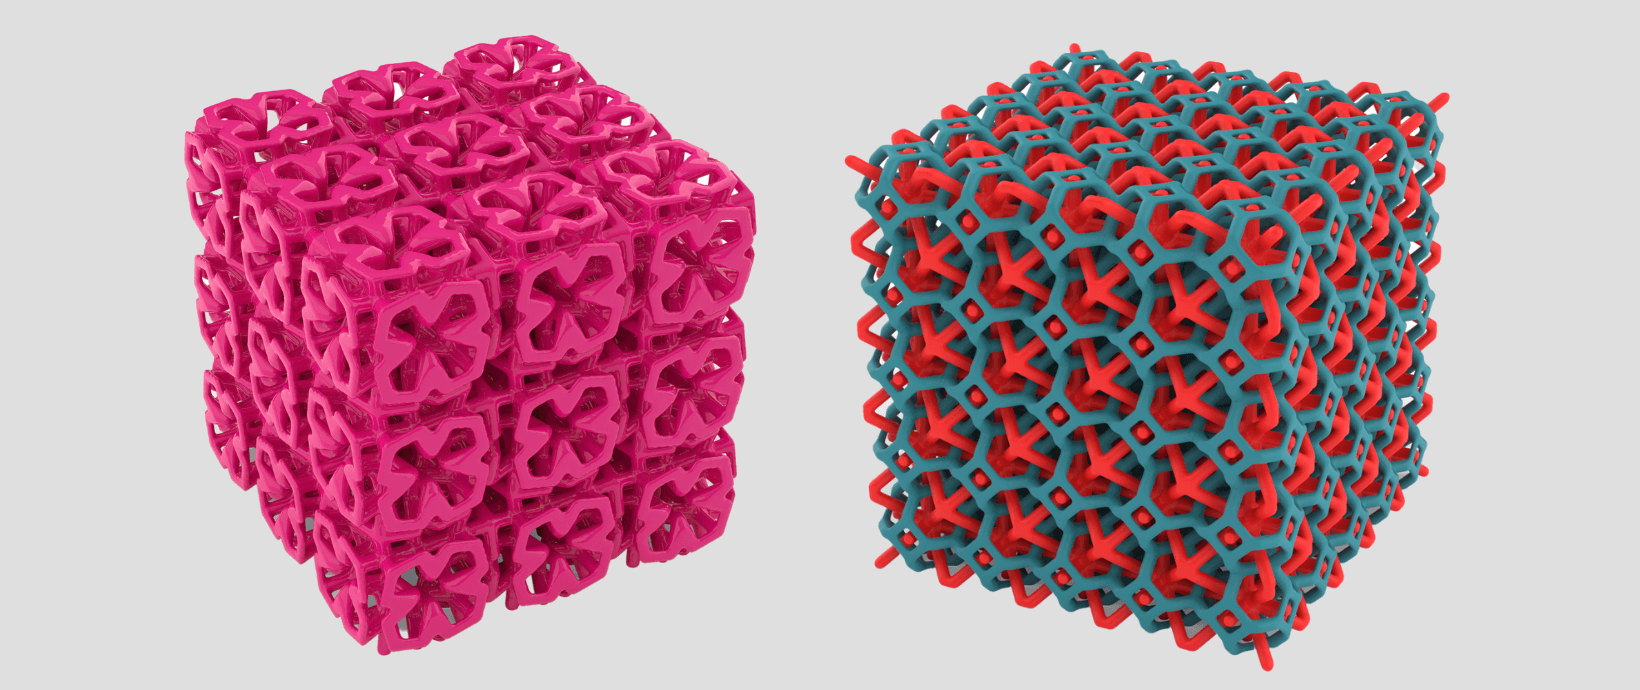 Beyond Lightweighting – The Benefits of 3D-Printed Metamaterials